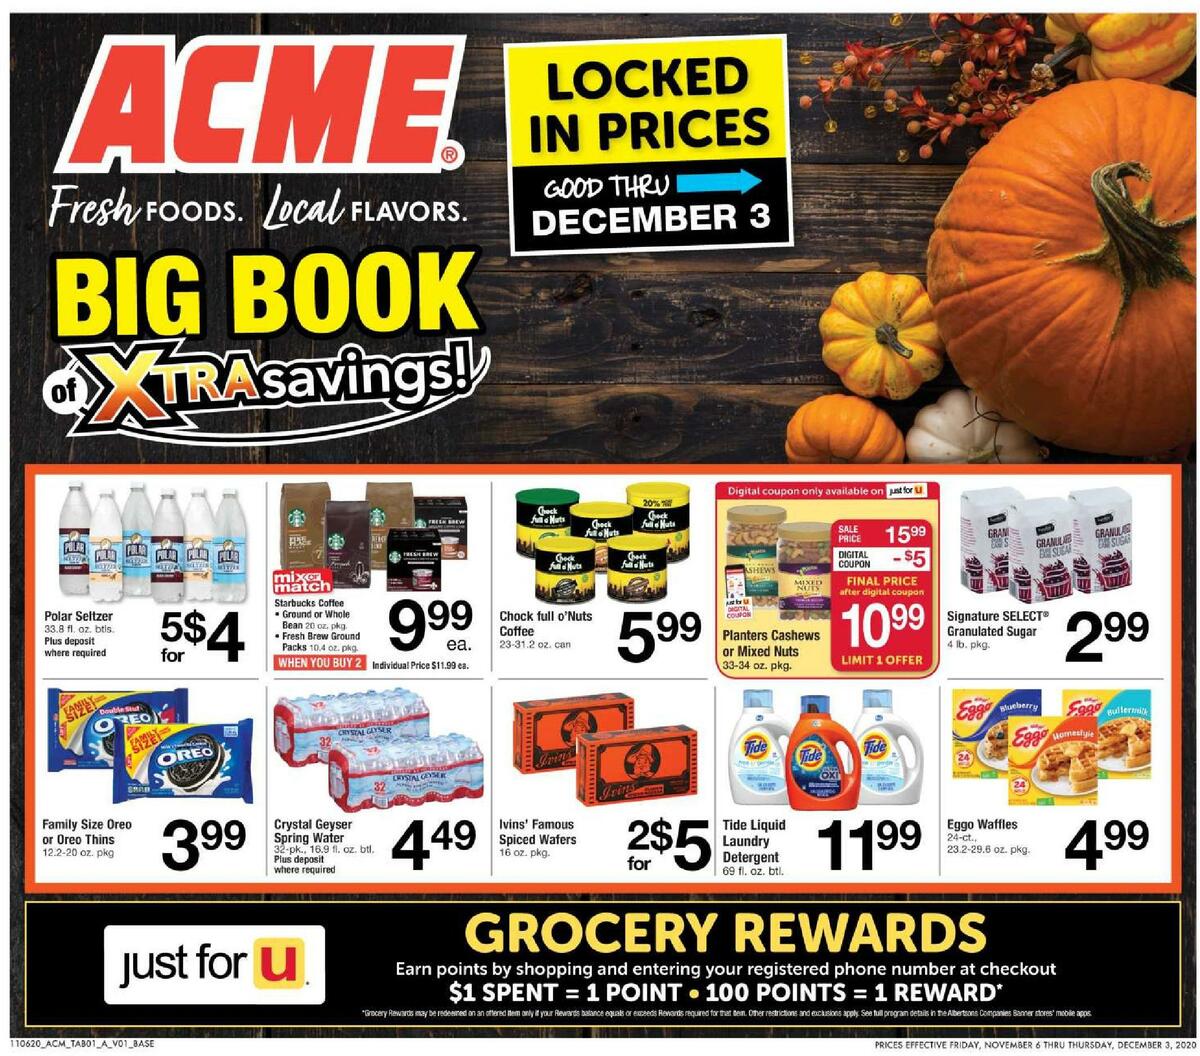 ACME Markets Big Book Weekly Ad from November 6